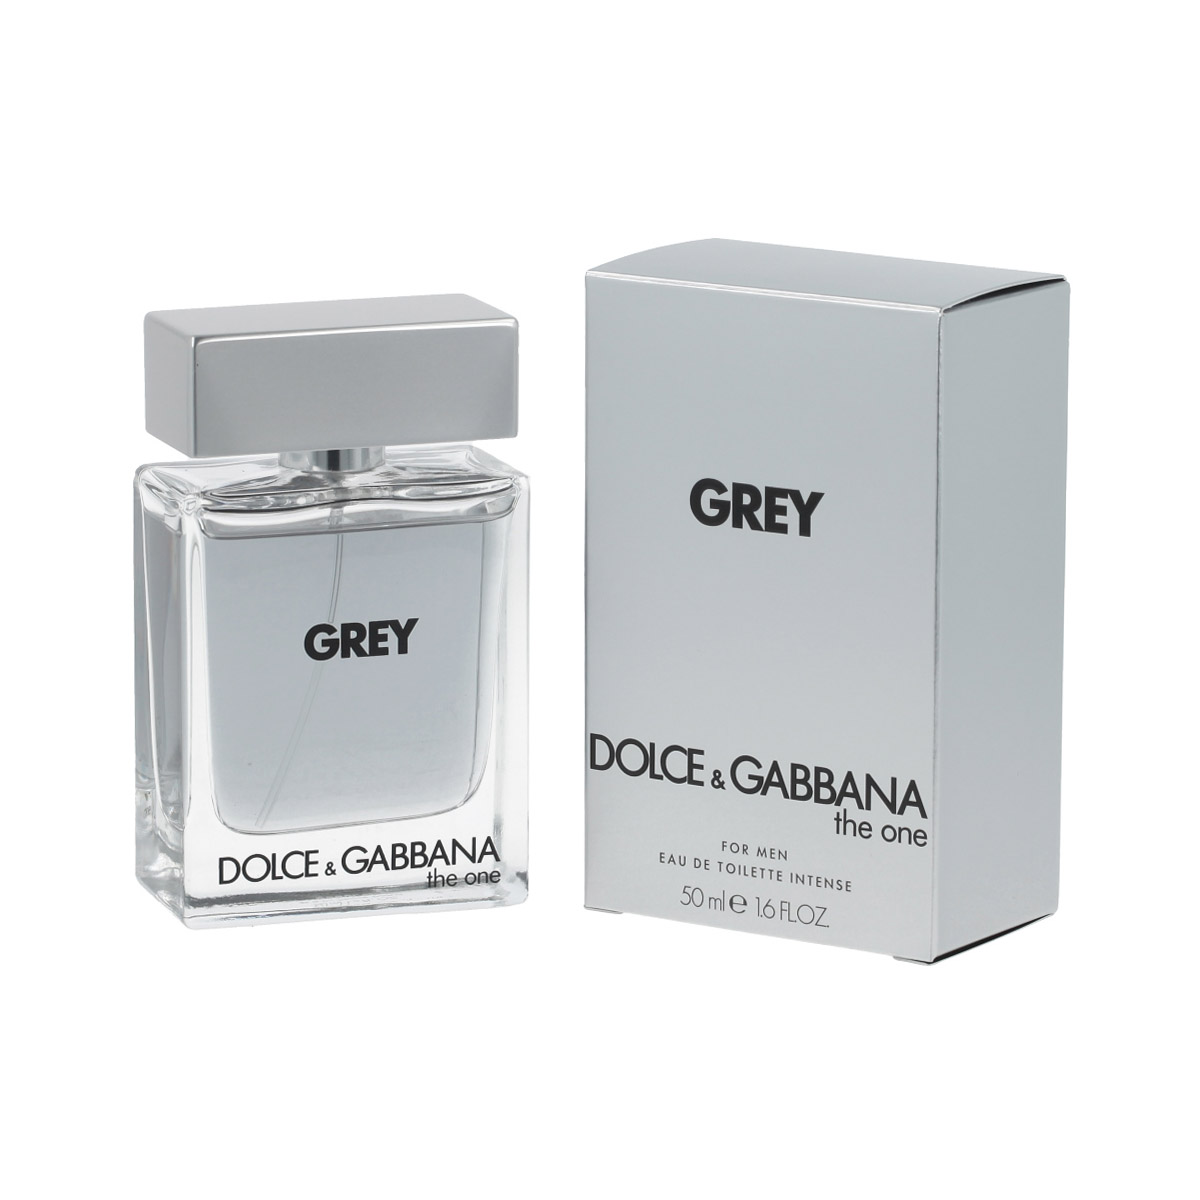 Духи грей. Dolce Gabbana the one Grey. Туалетная вода Dolce & Gabbana the one Grey. Dolce Gabbana Grey. Dolce Gabbana the one for men Grey.